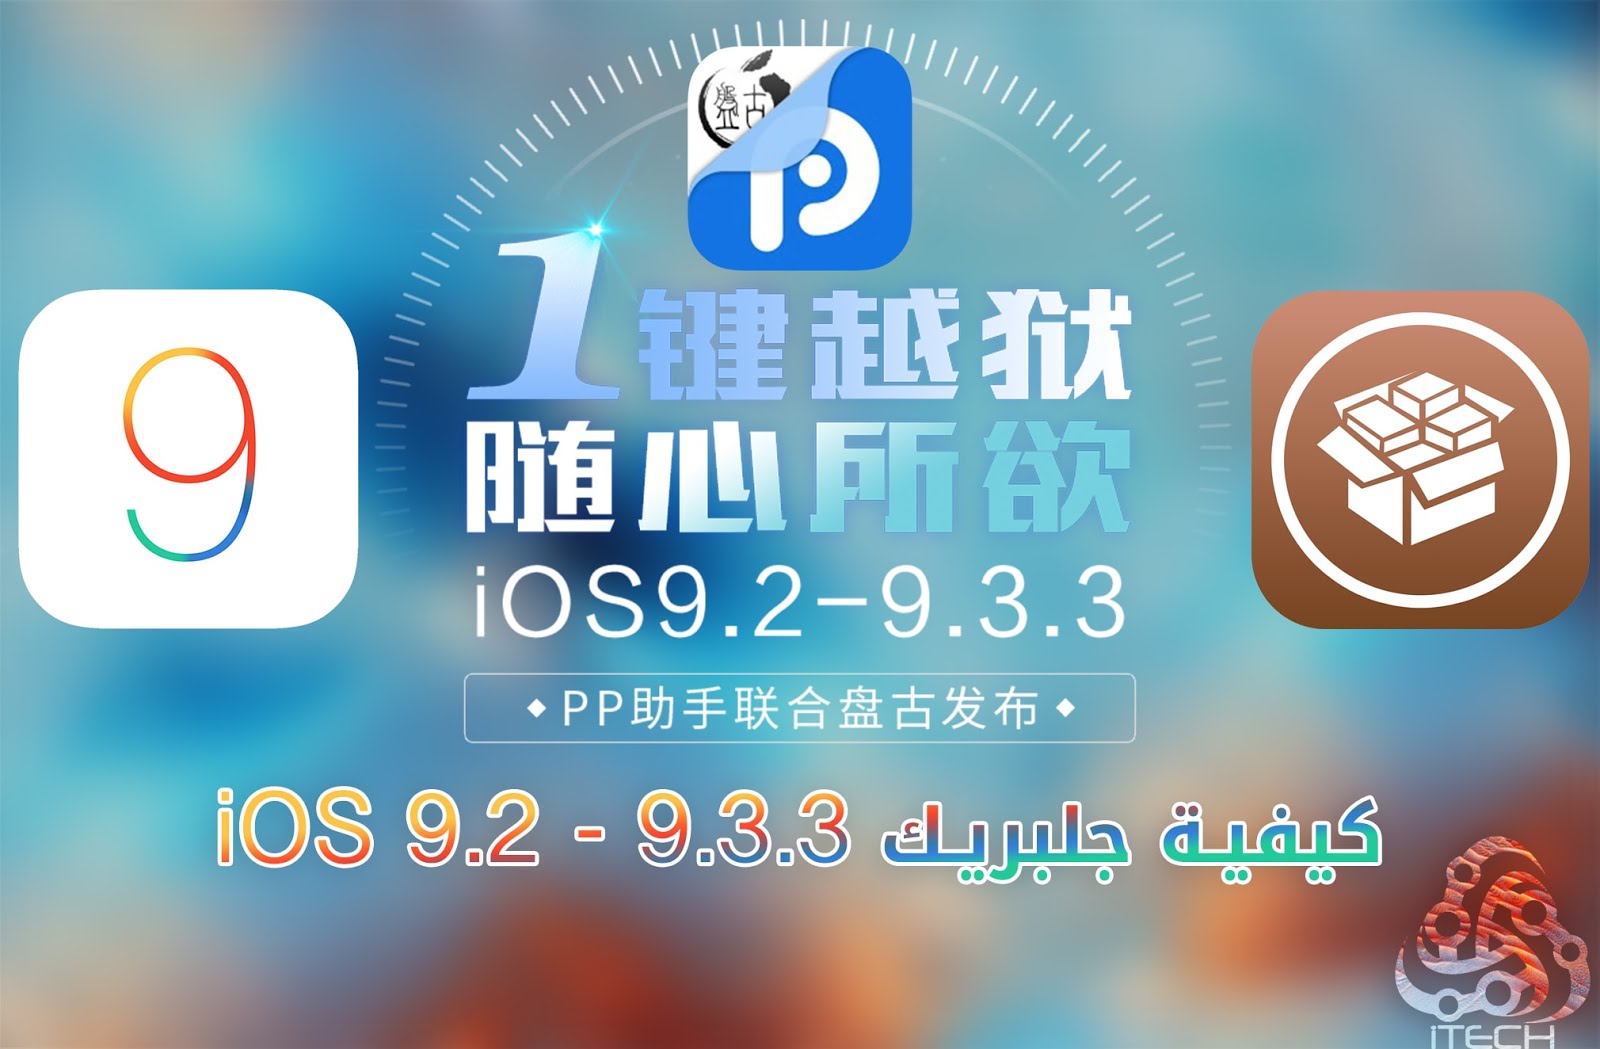 iOS 9.2 - 9.3.3 كيفية جلبريك